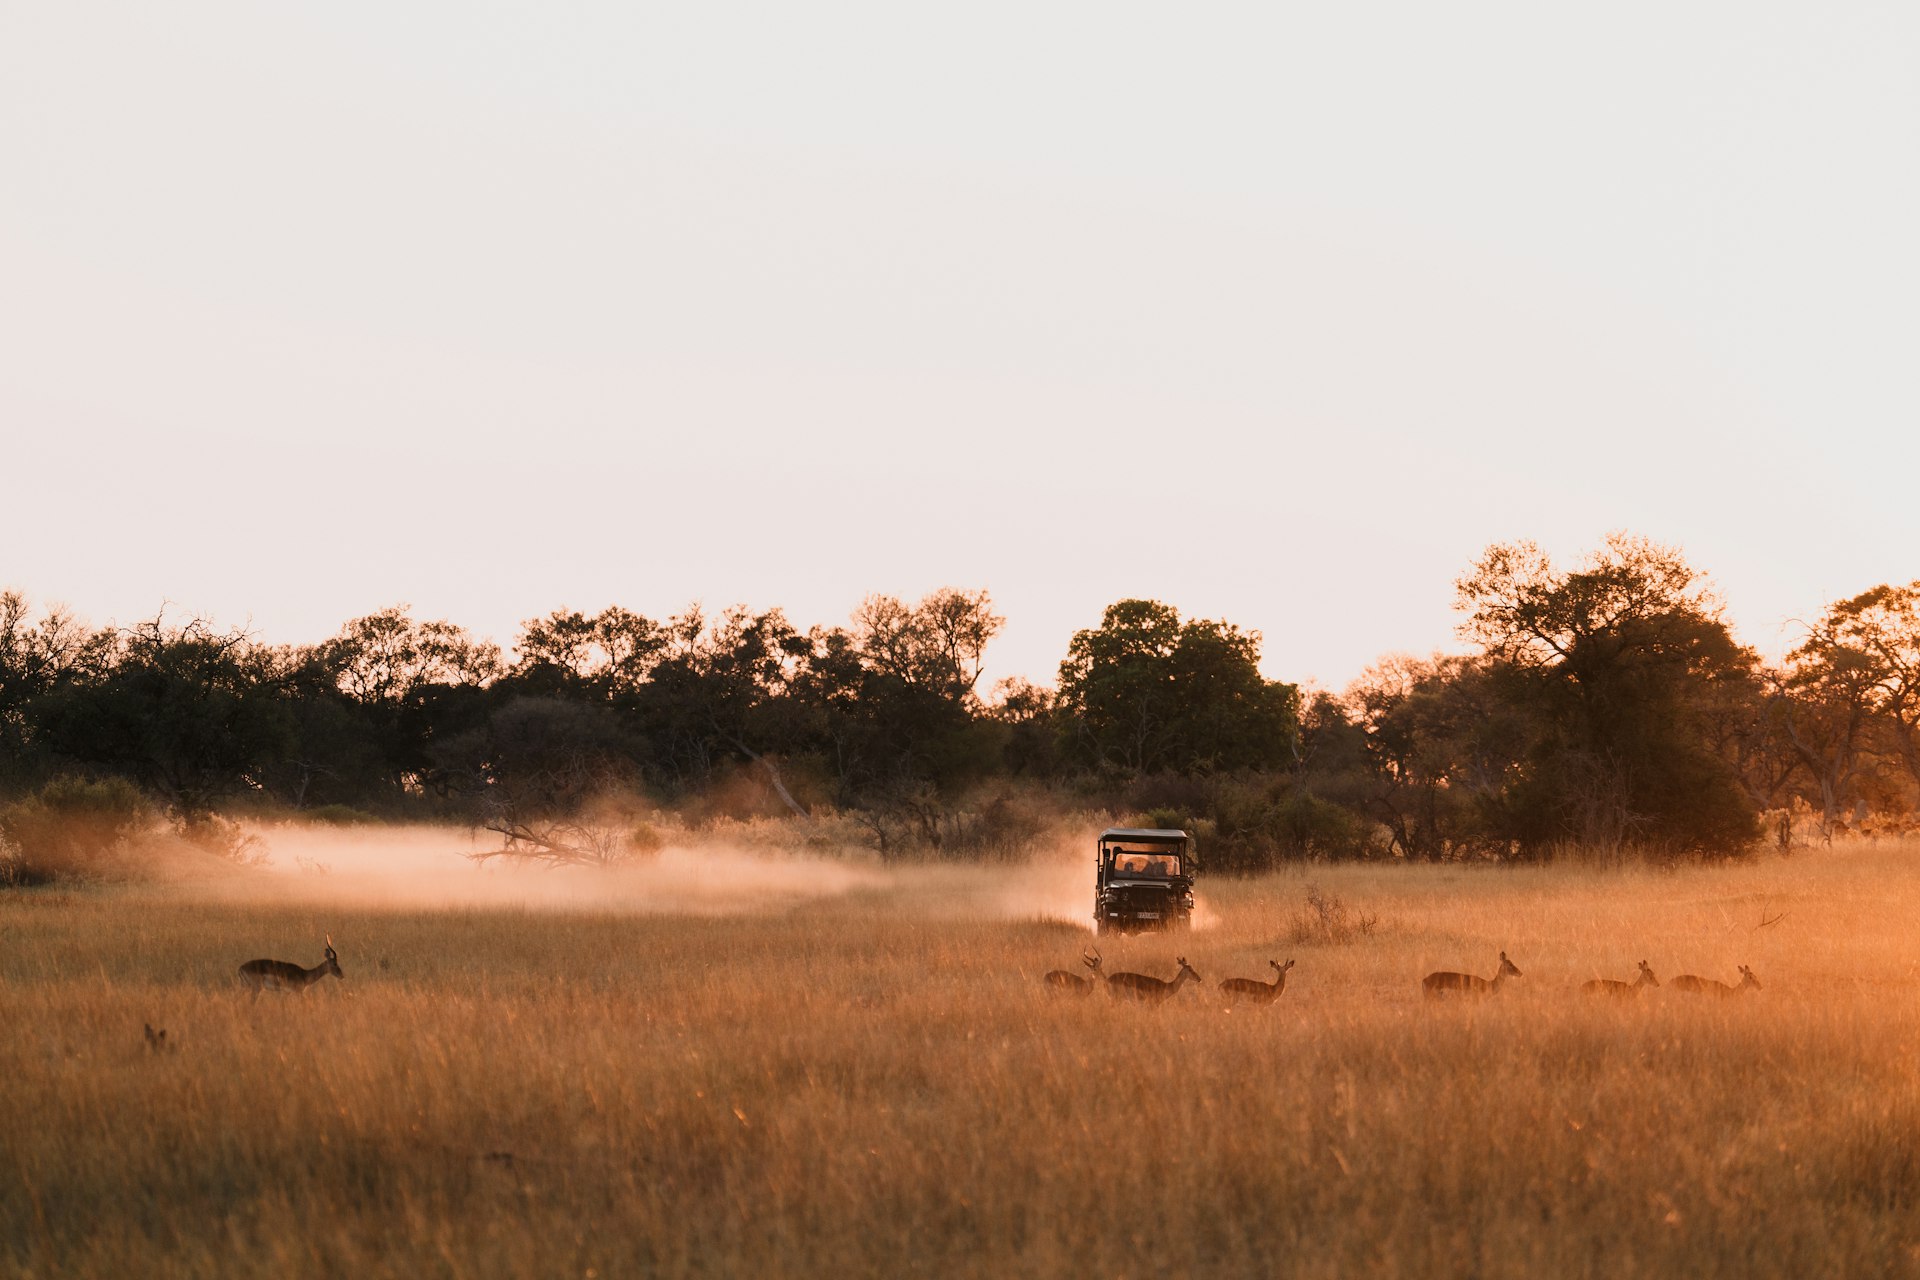 A safari truck drives through a deserted landscape in Botswana